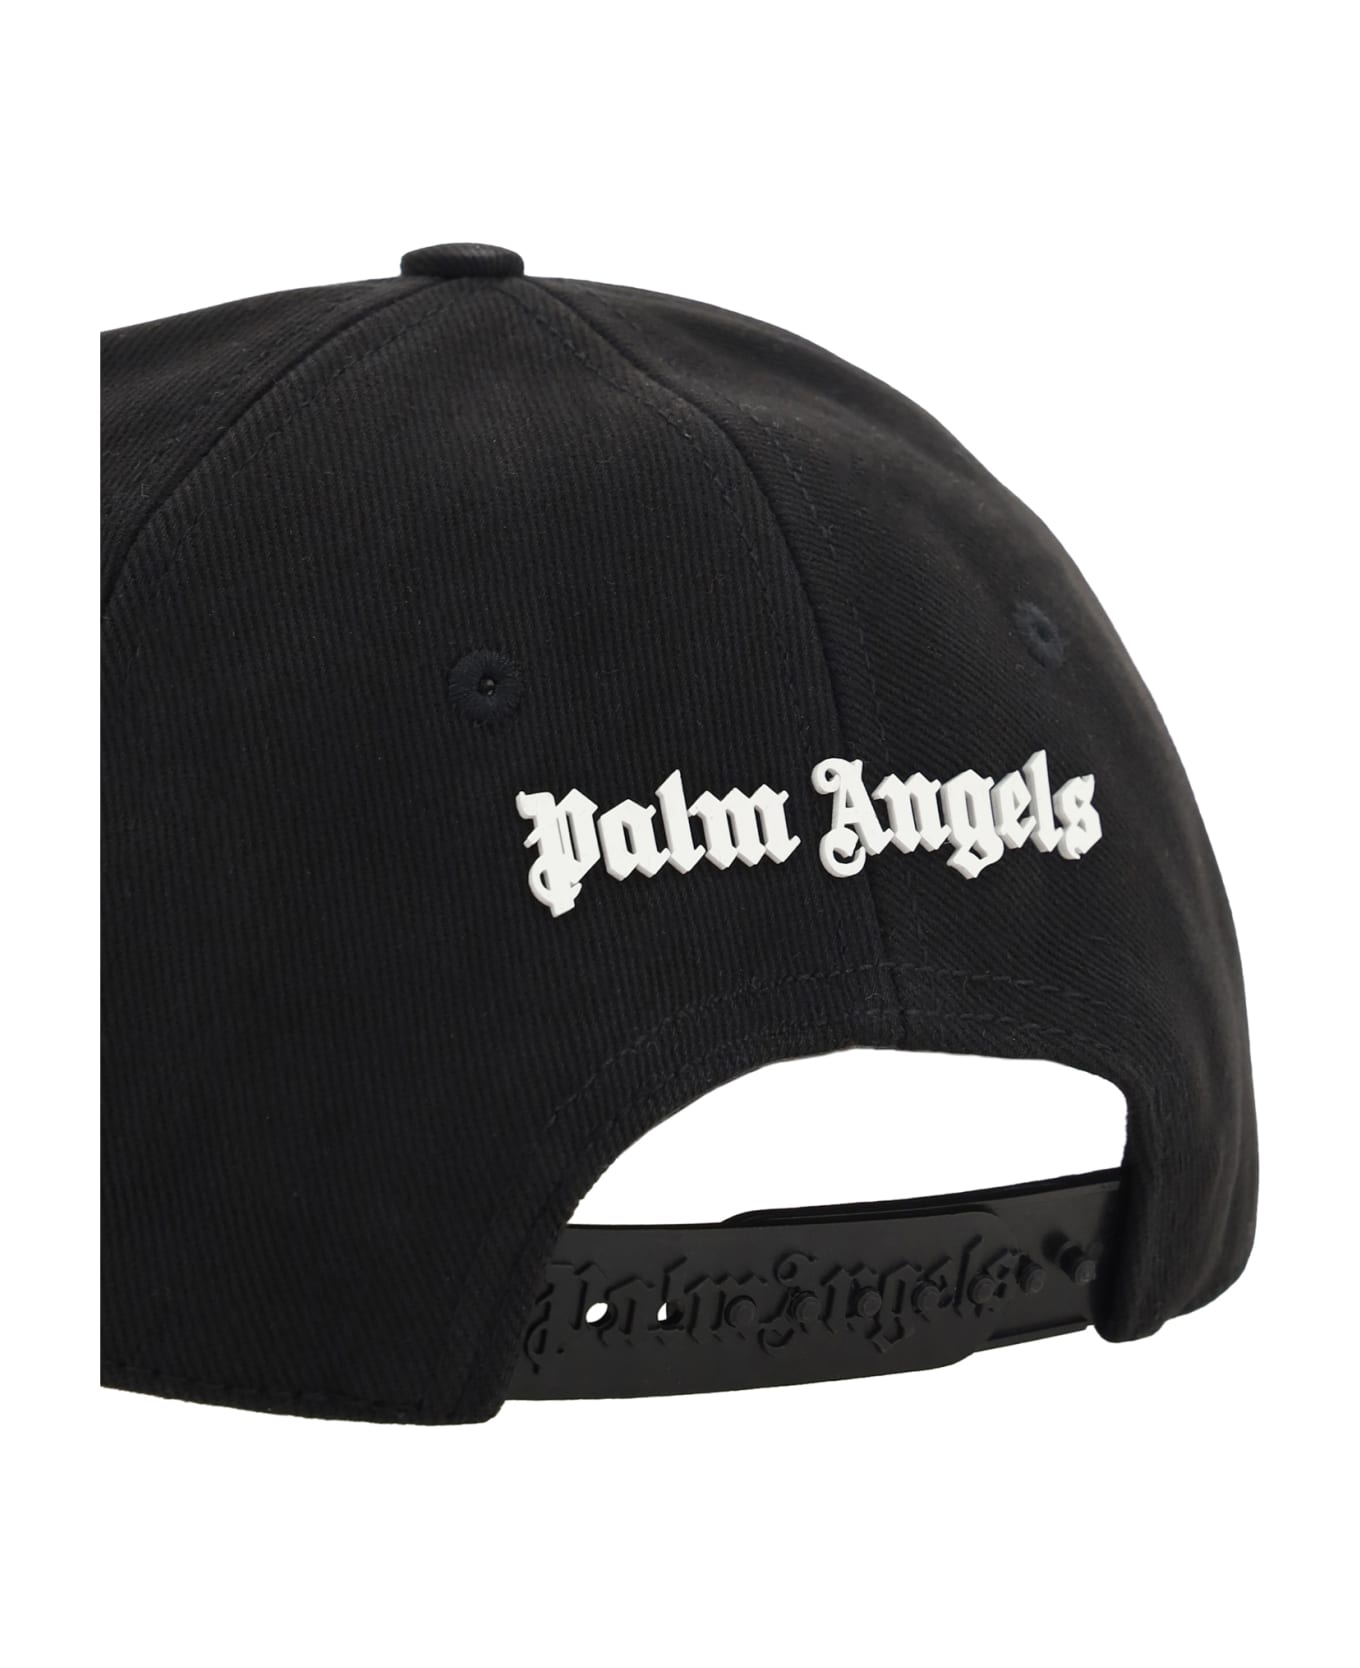 Palm Angels Baseball Cap - Black Whit 帽子